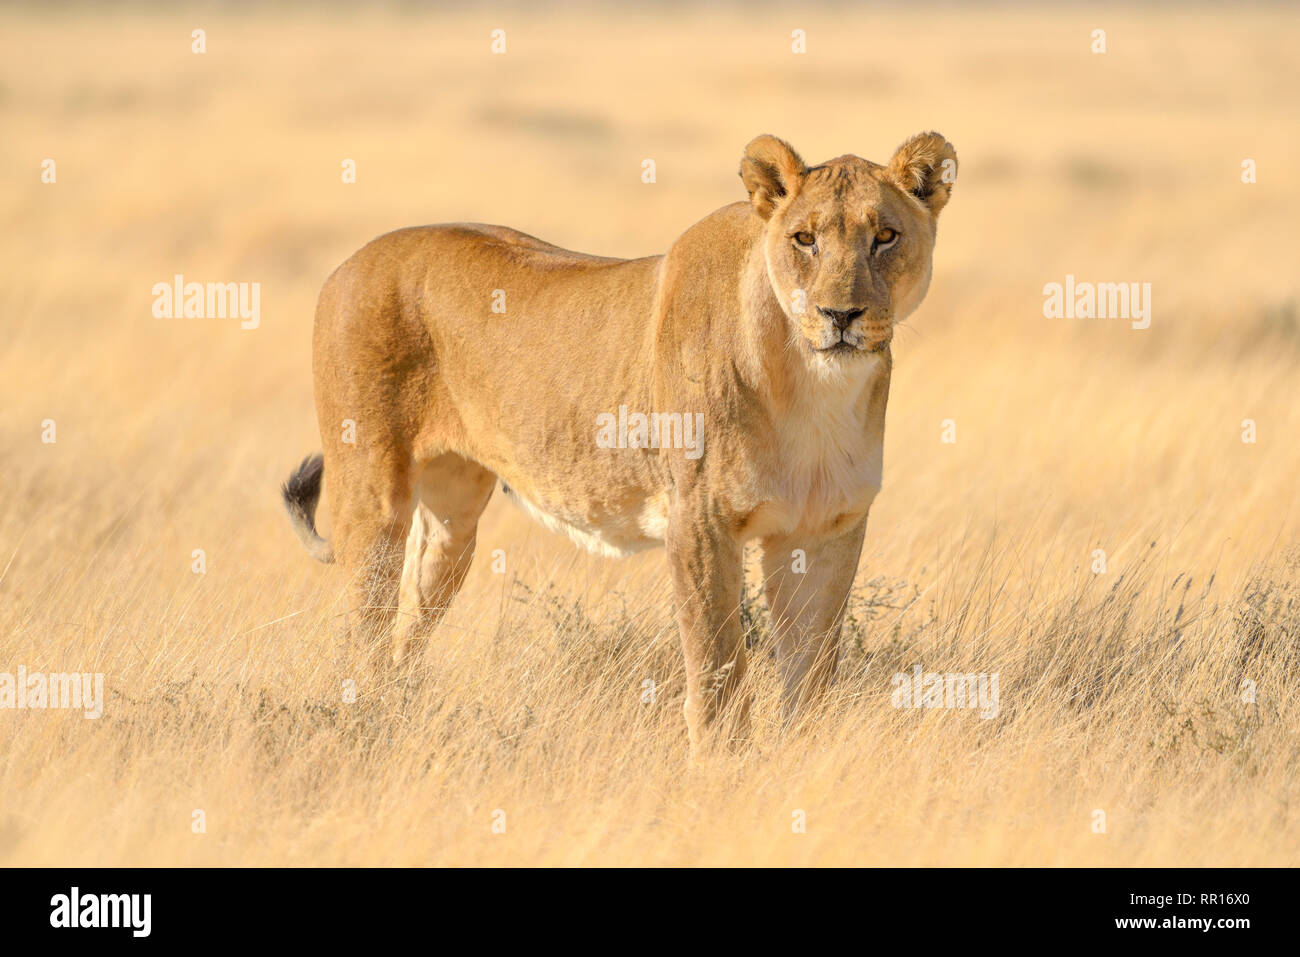 Zoologie, Säugetiere (Mammalia), Löwe (Panthera leo), weibliche Tier, Etosha National Park, Namibia, Additional-Rights - Clearance-Info - Not-Available Stockfoto